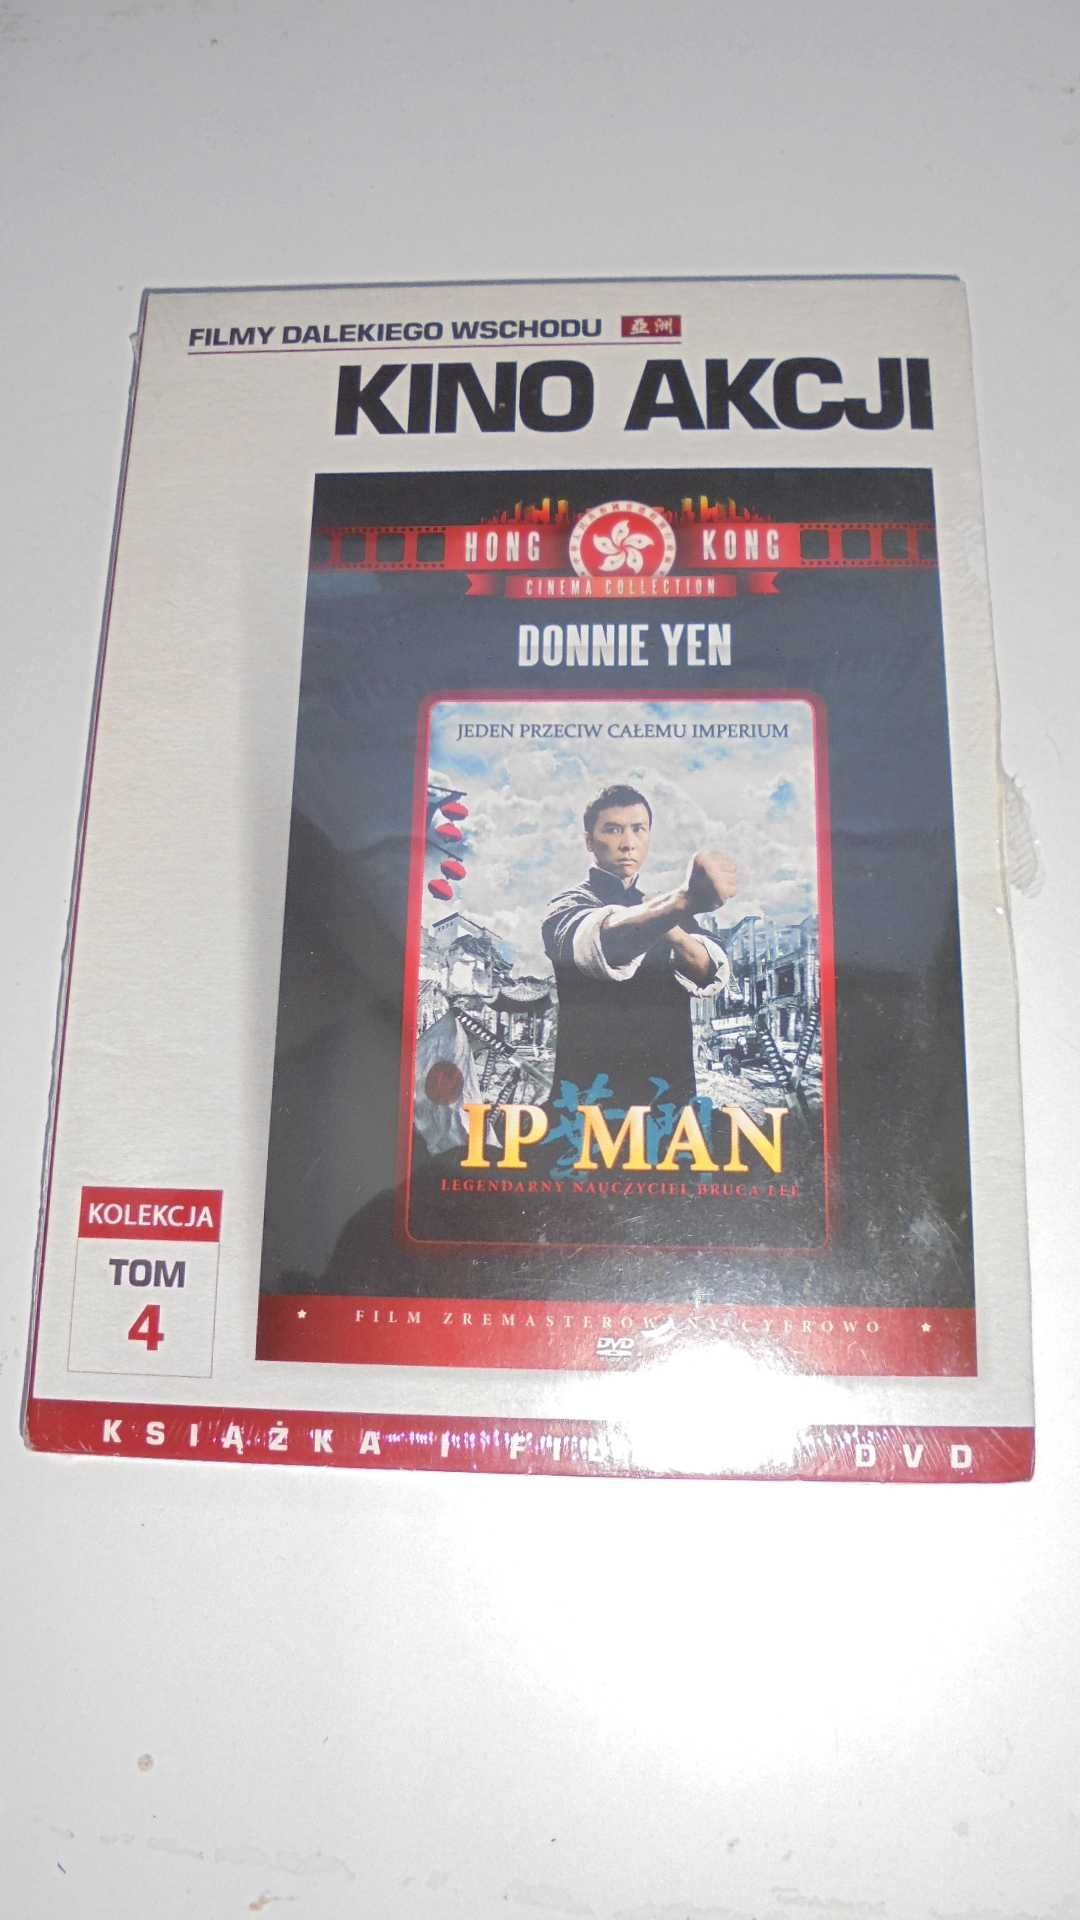 kino akcji: Ip man dvd, Donnie Yen